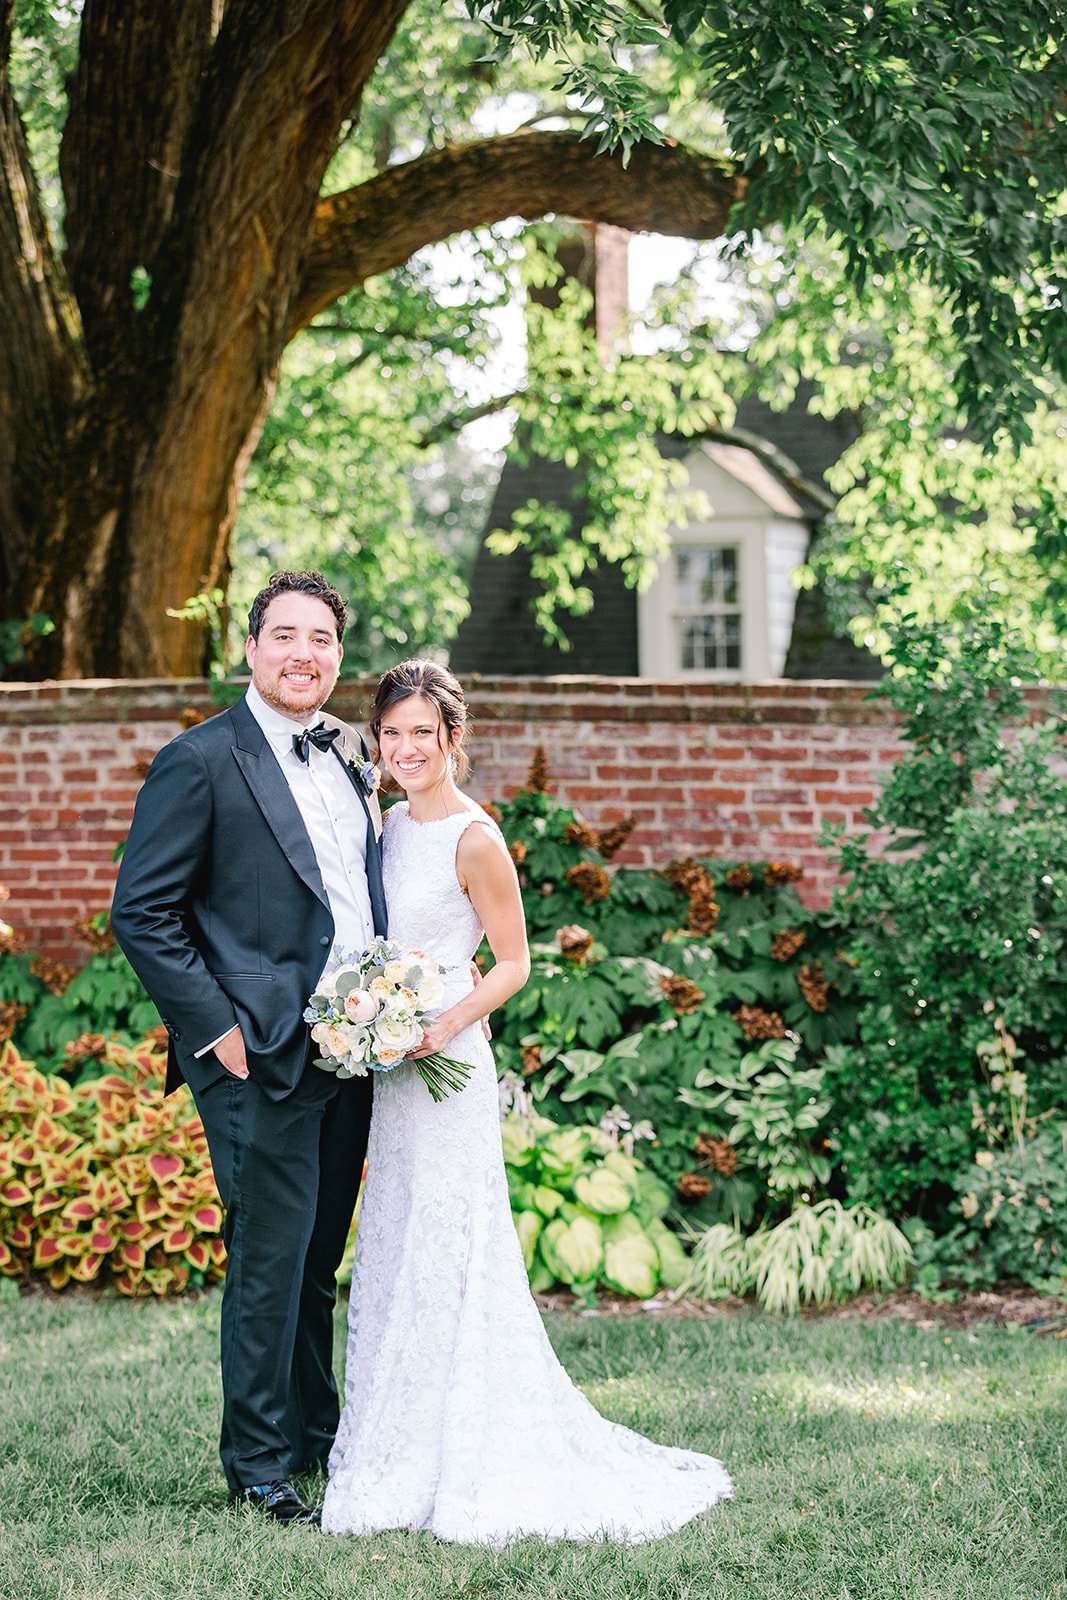 Jon & Christina Blue and white garden wedding  - River Farm, VA